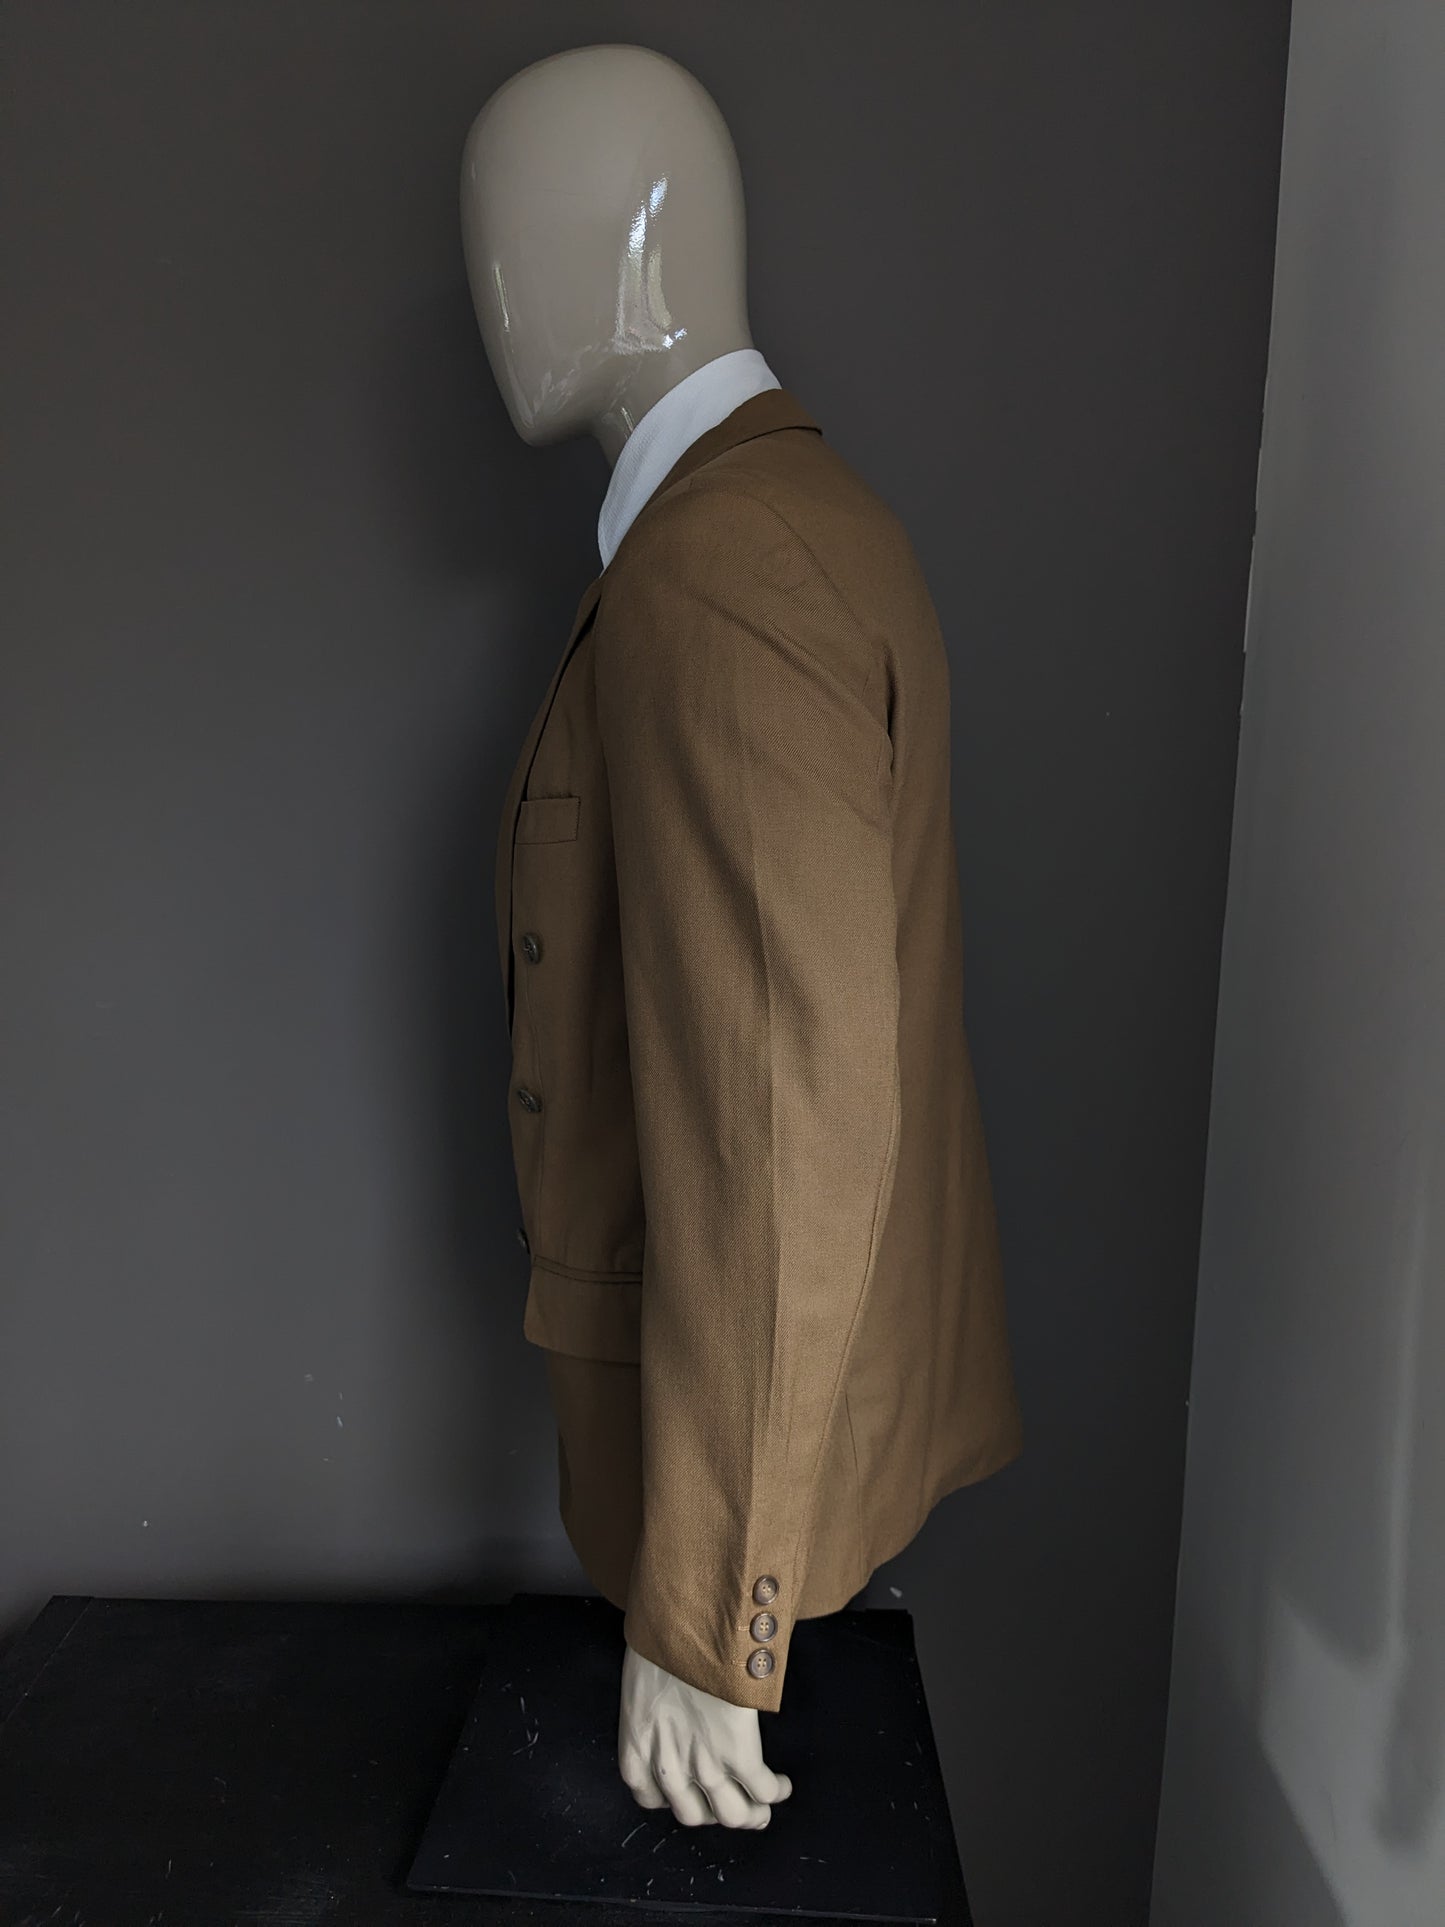 B Scelta: lana vintage Andrews & May Double Breasted Giacca. Colore marrone chiaro. Dimensione 49 (m).